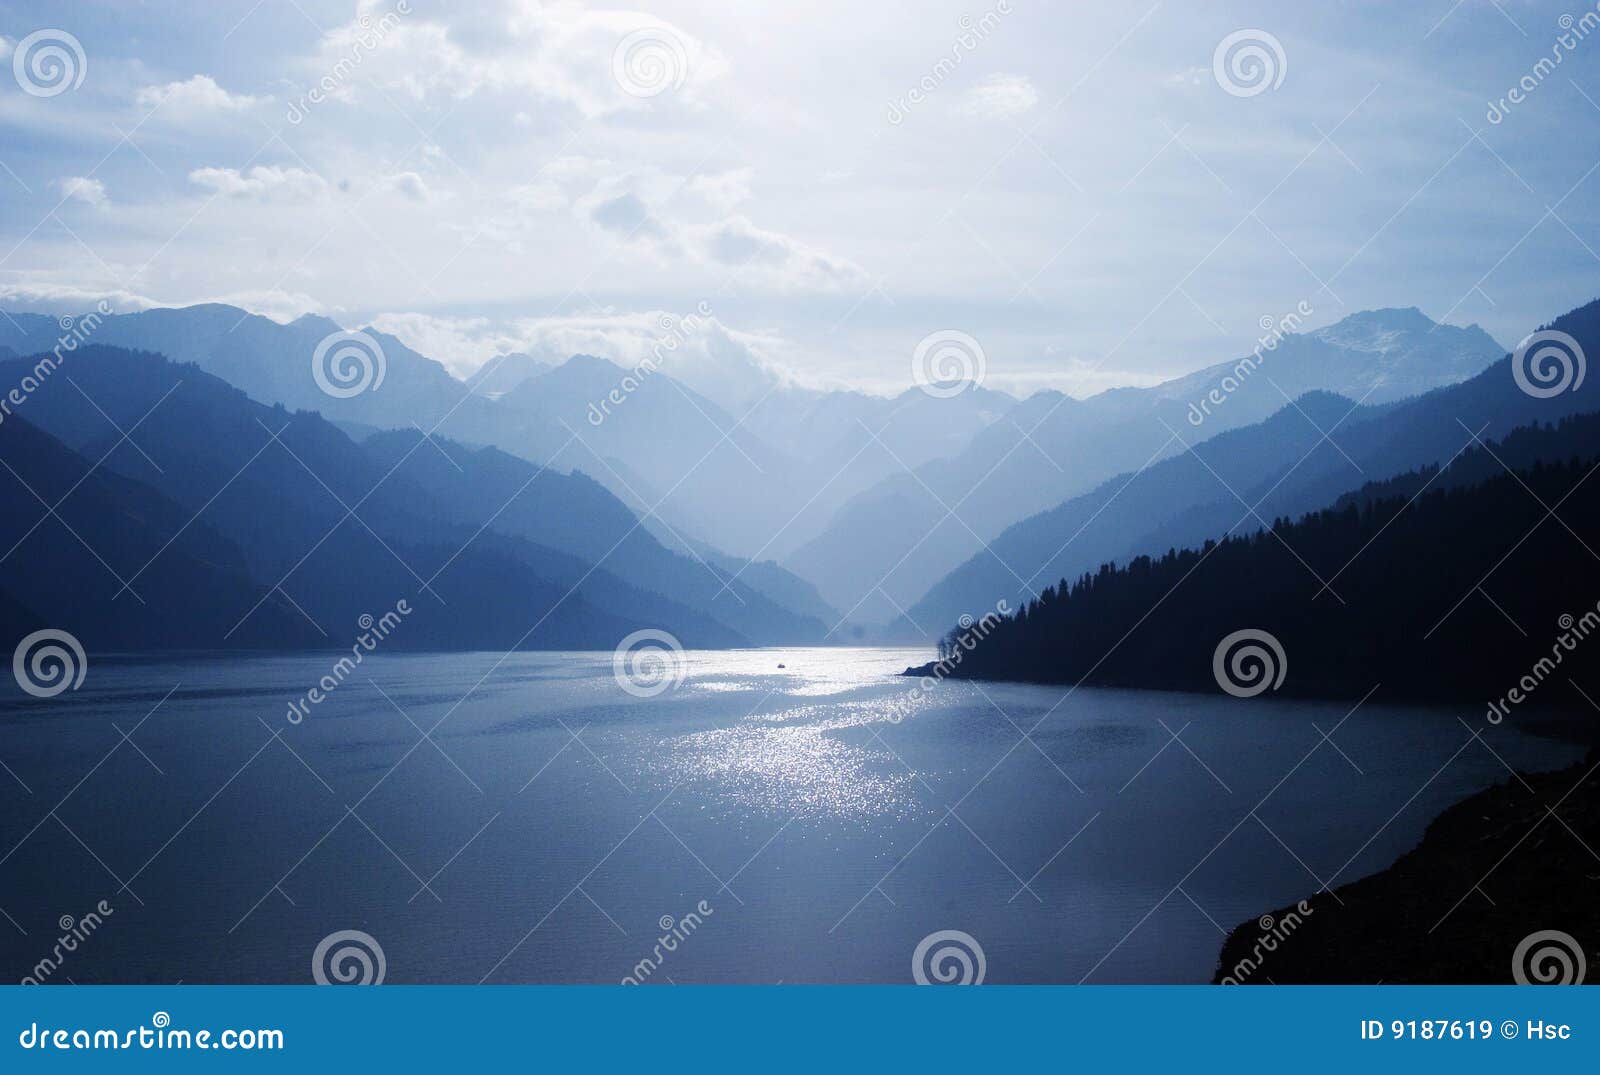 mountains and lake